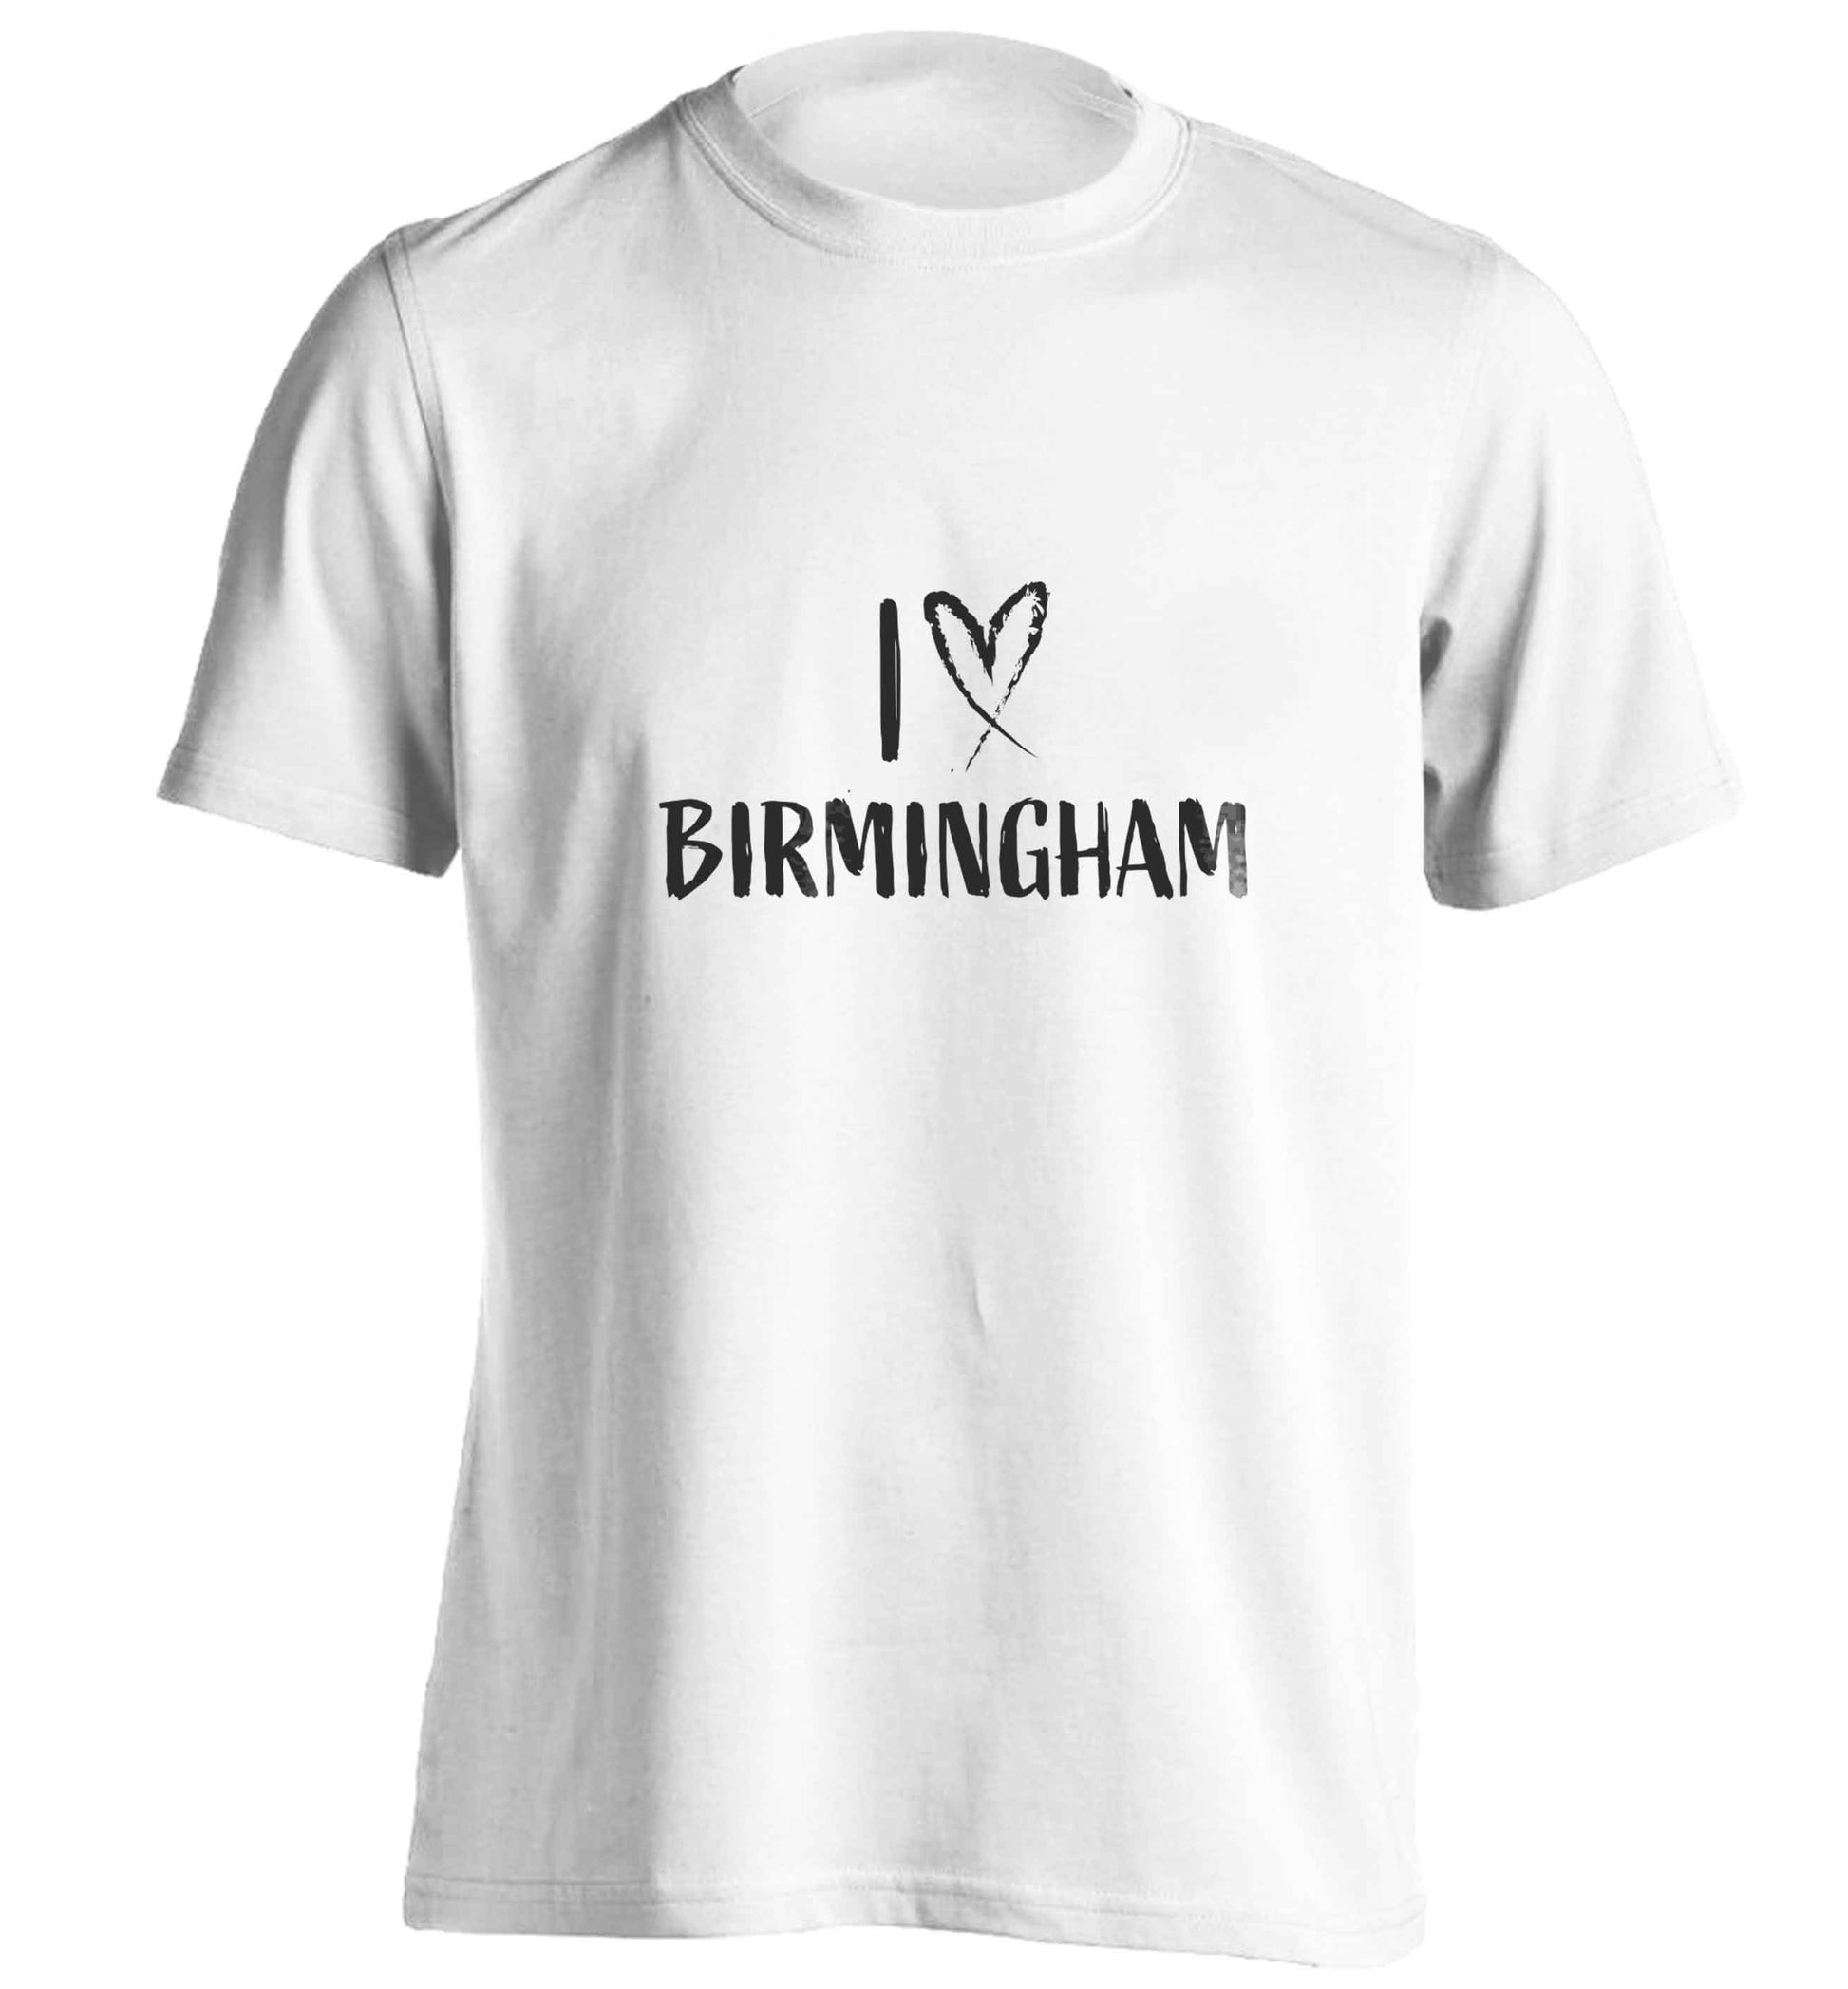 I love Birmingham adults unisex white Tshirt 2XL